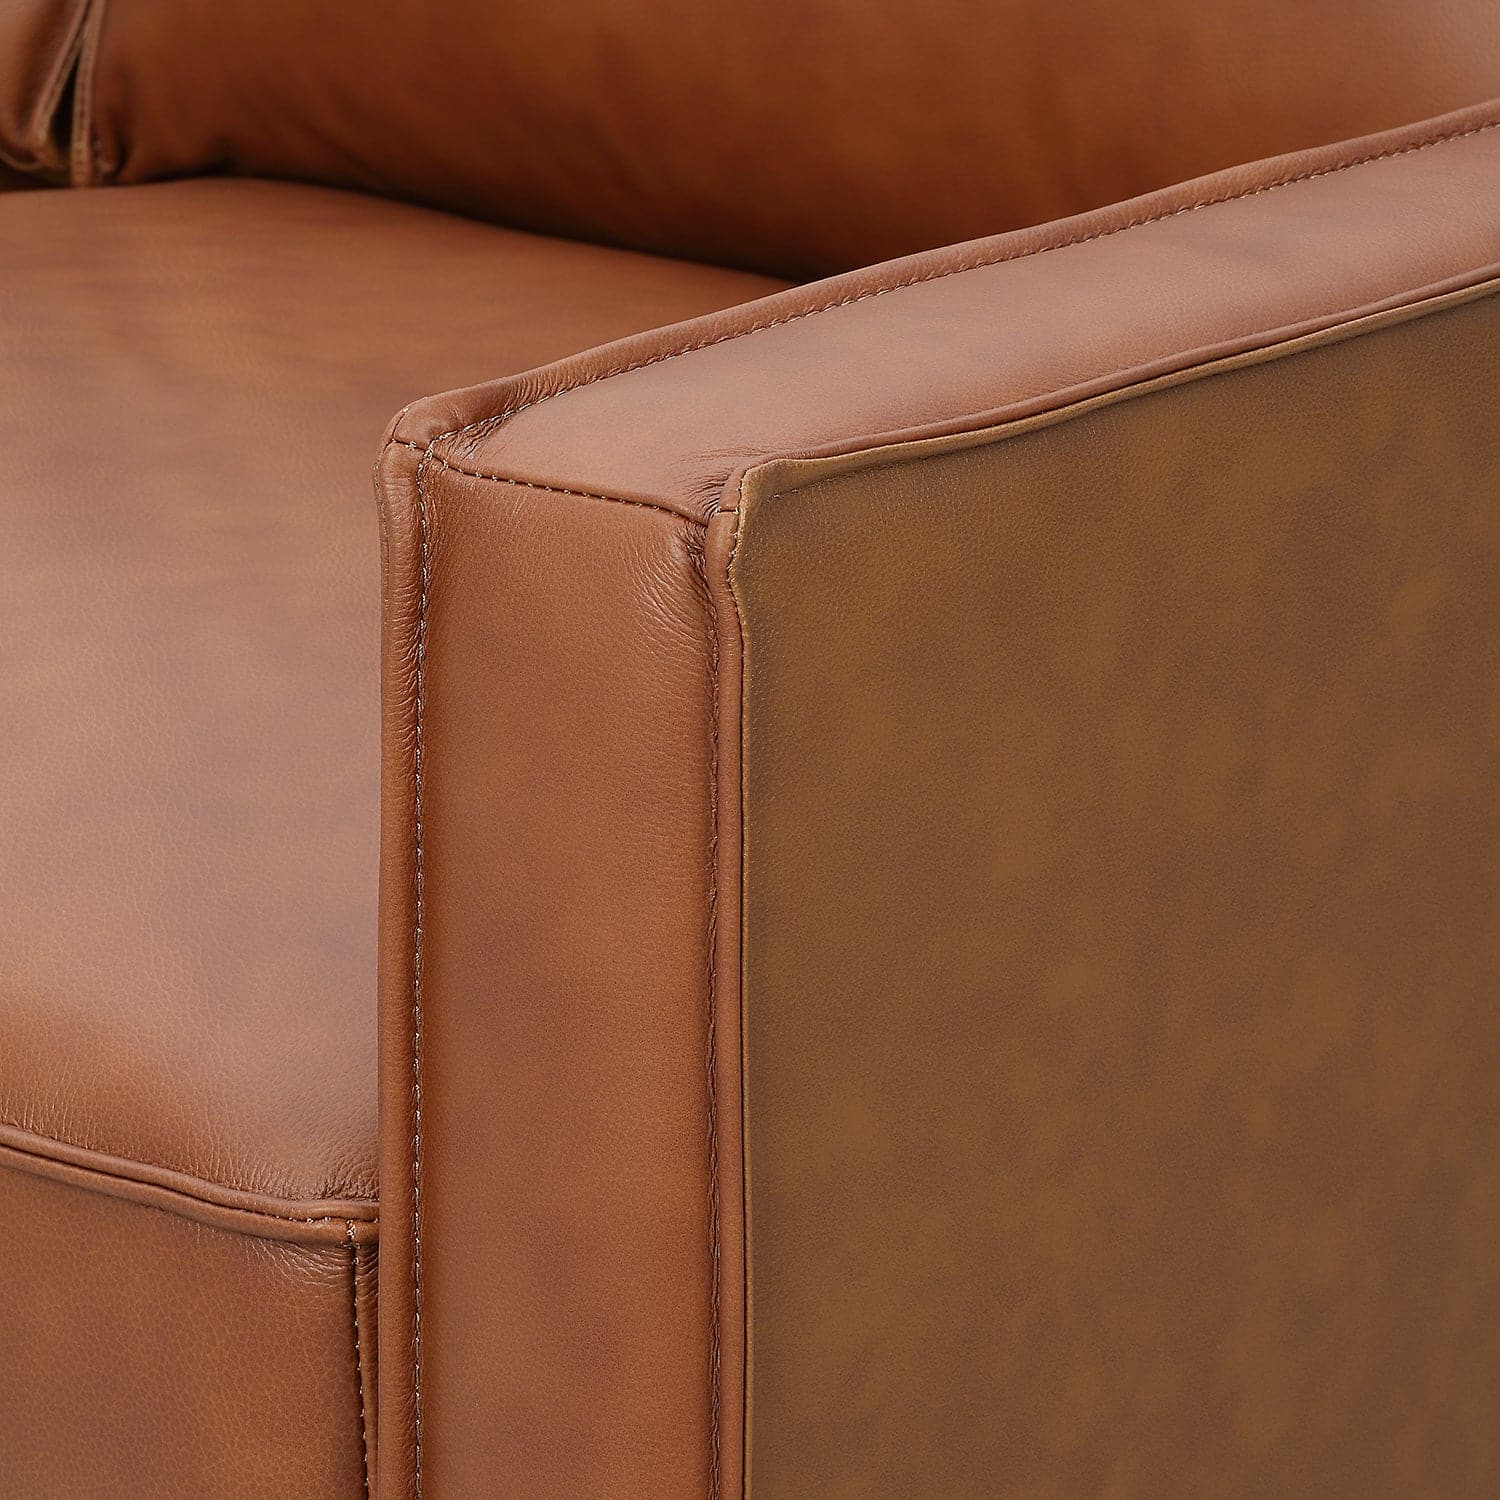 Pimlico Camel Brown Top Grain Leather 3 Pieces Living Room Sofa Set